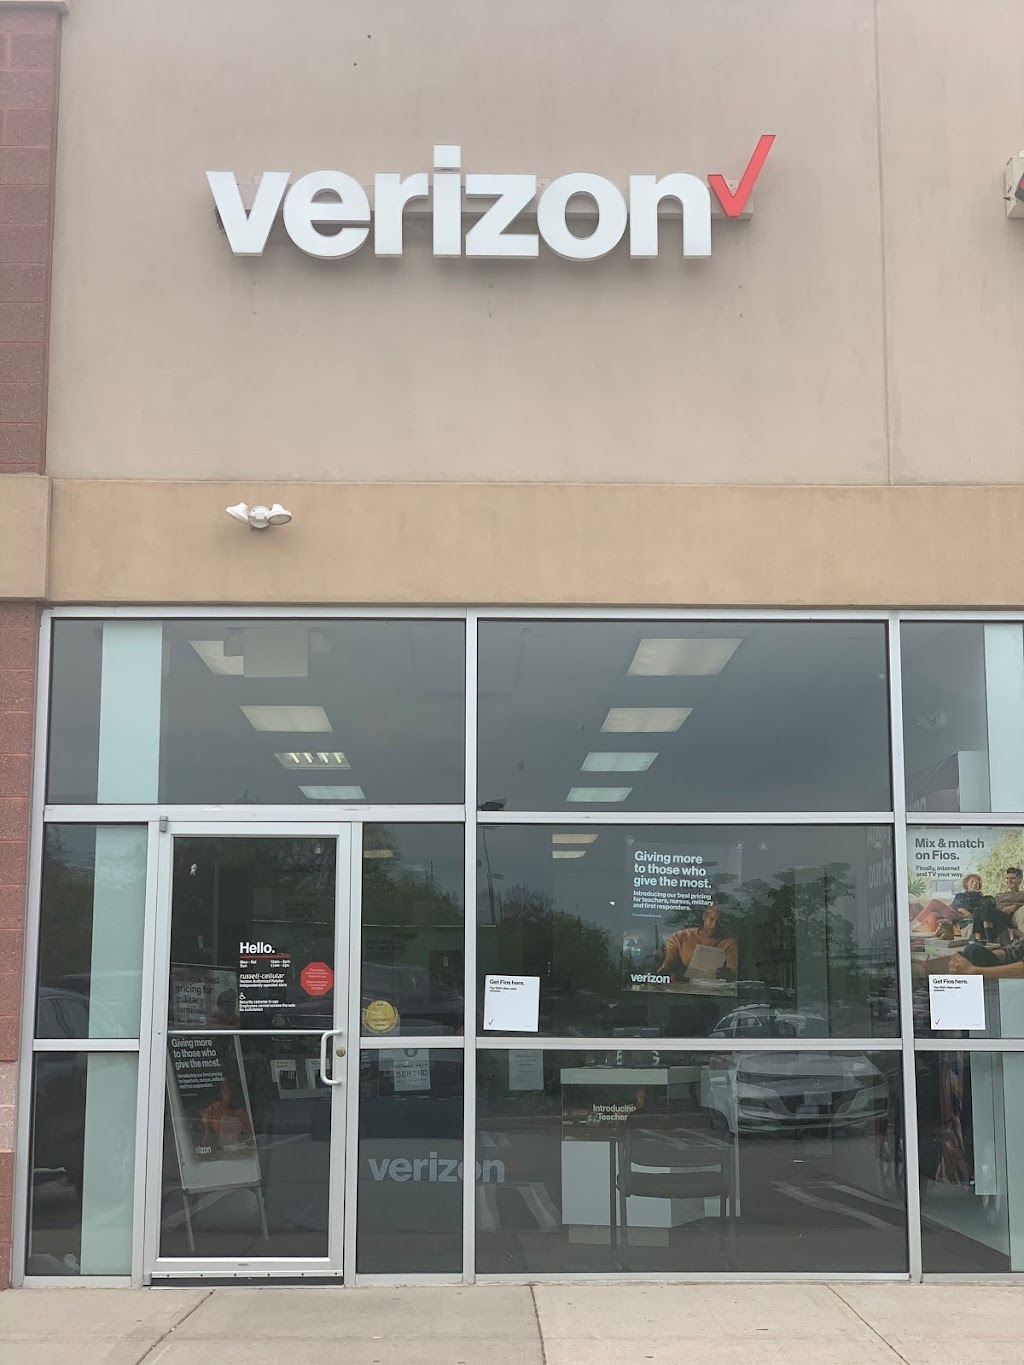 Verizon Authorized Retailer - Russell Cellular | 454 Kinderkamack Rd, Emerson, NJ 07630 | Phone: (201) 483-8858